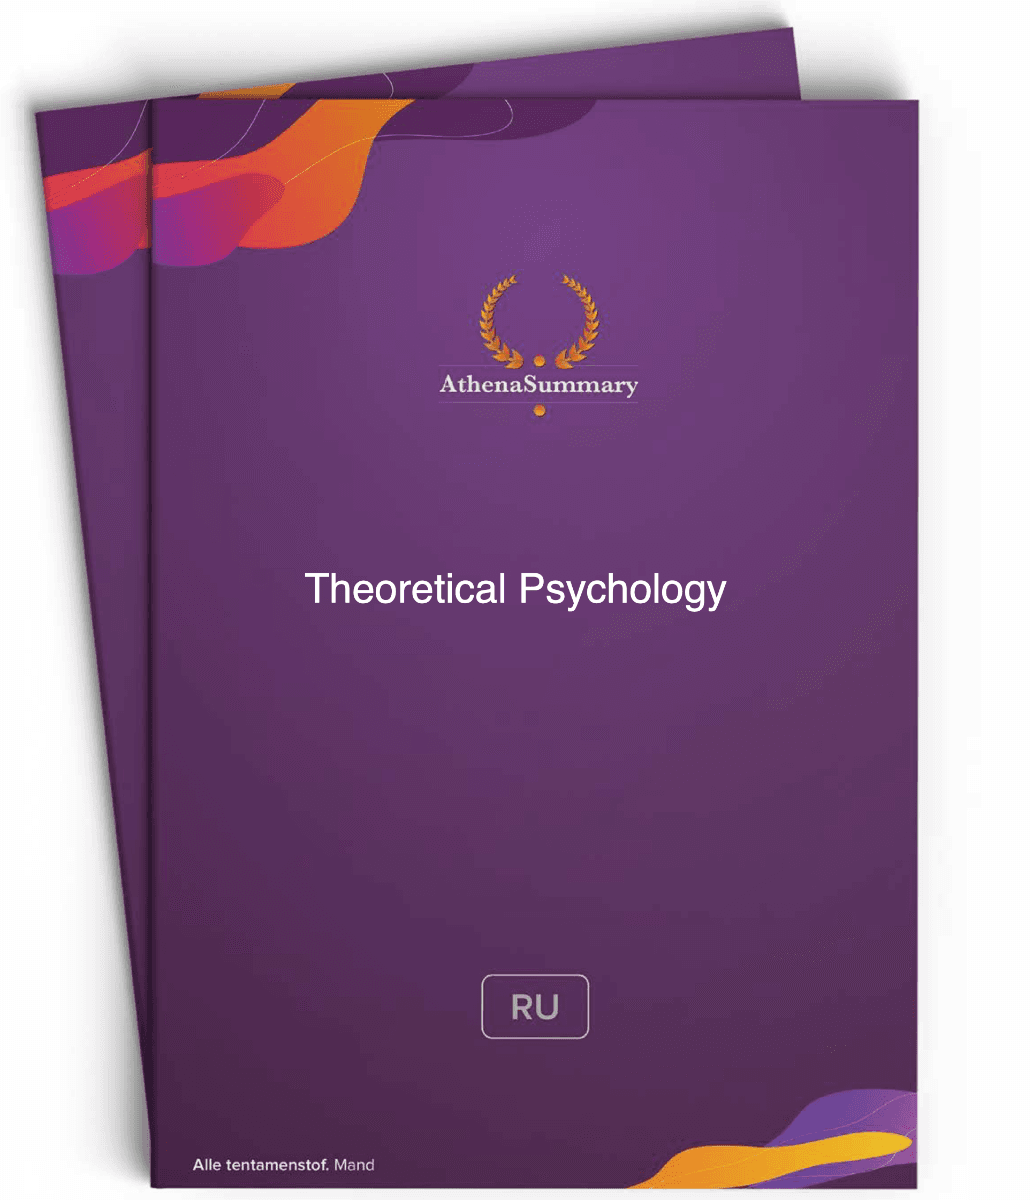 Literature Summary - Theoretical Psychology